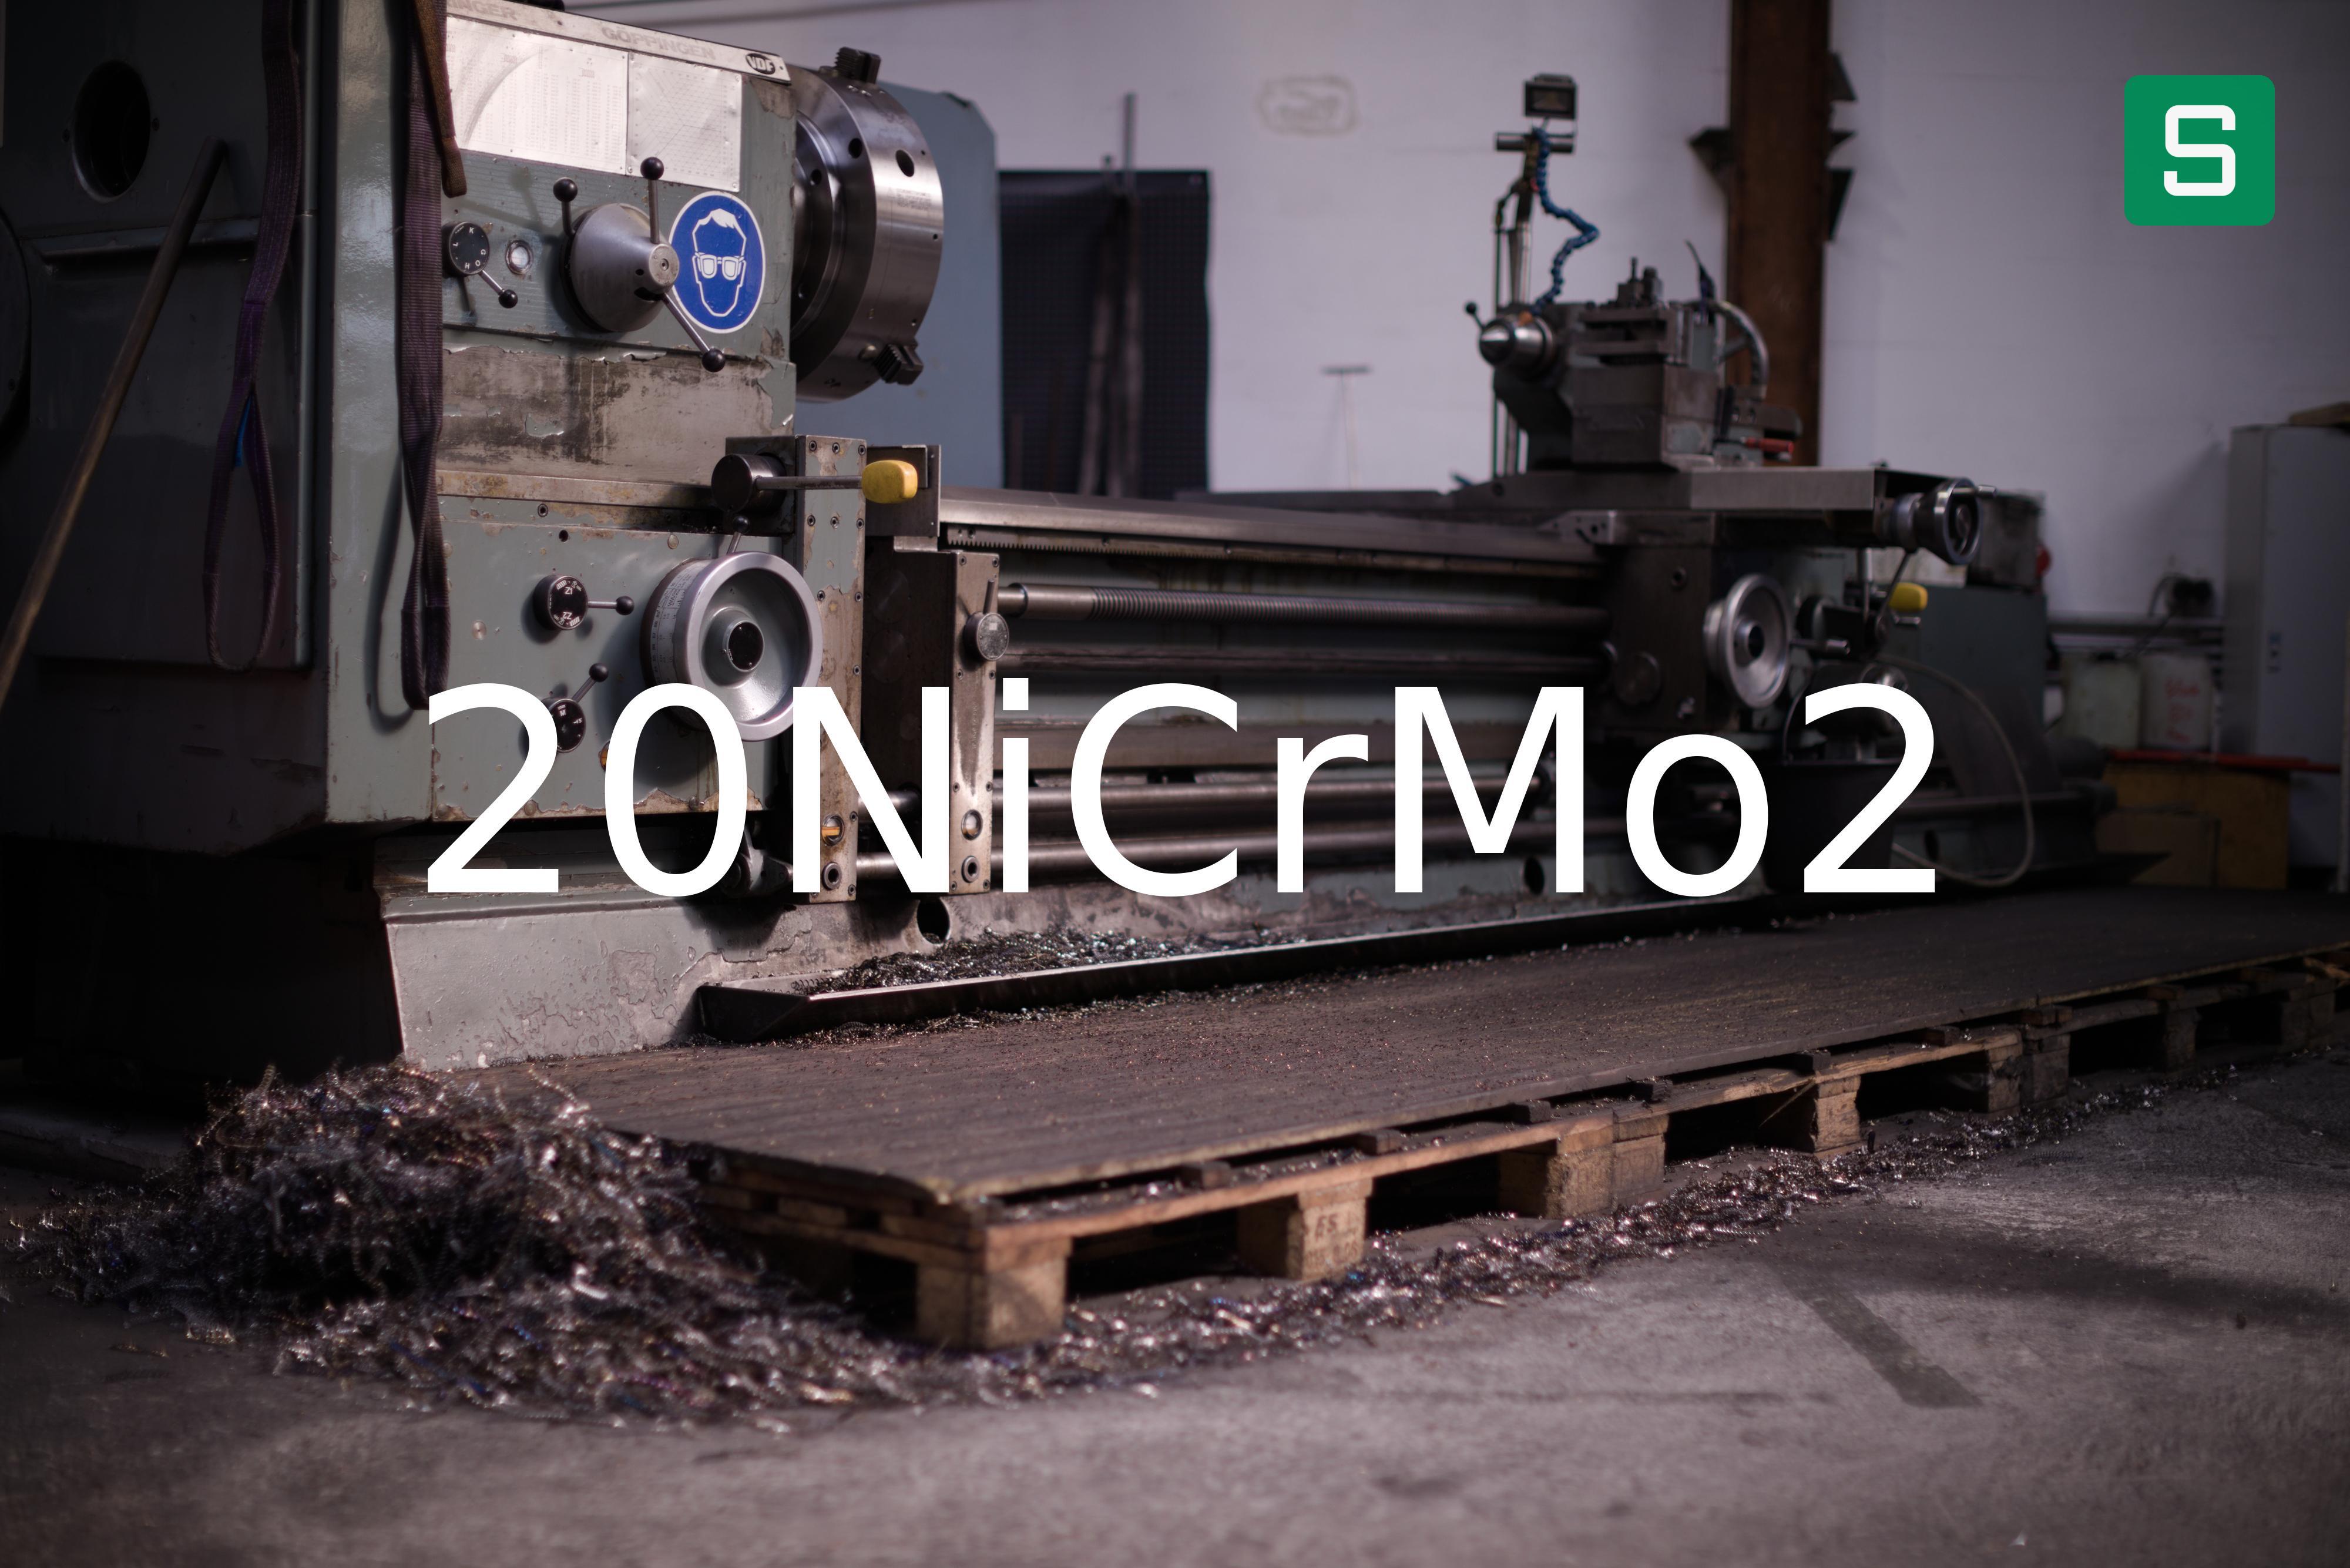 Steel Material: 20NiCrMo2